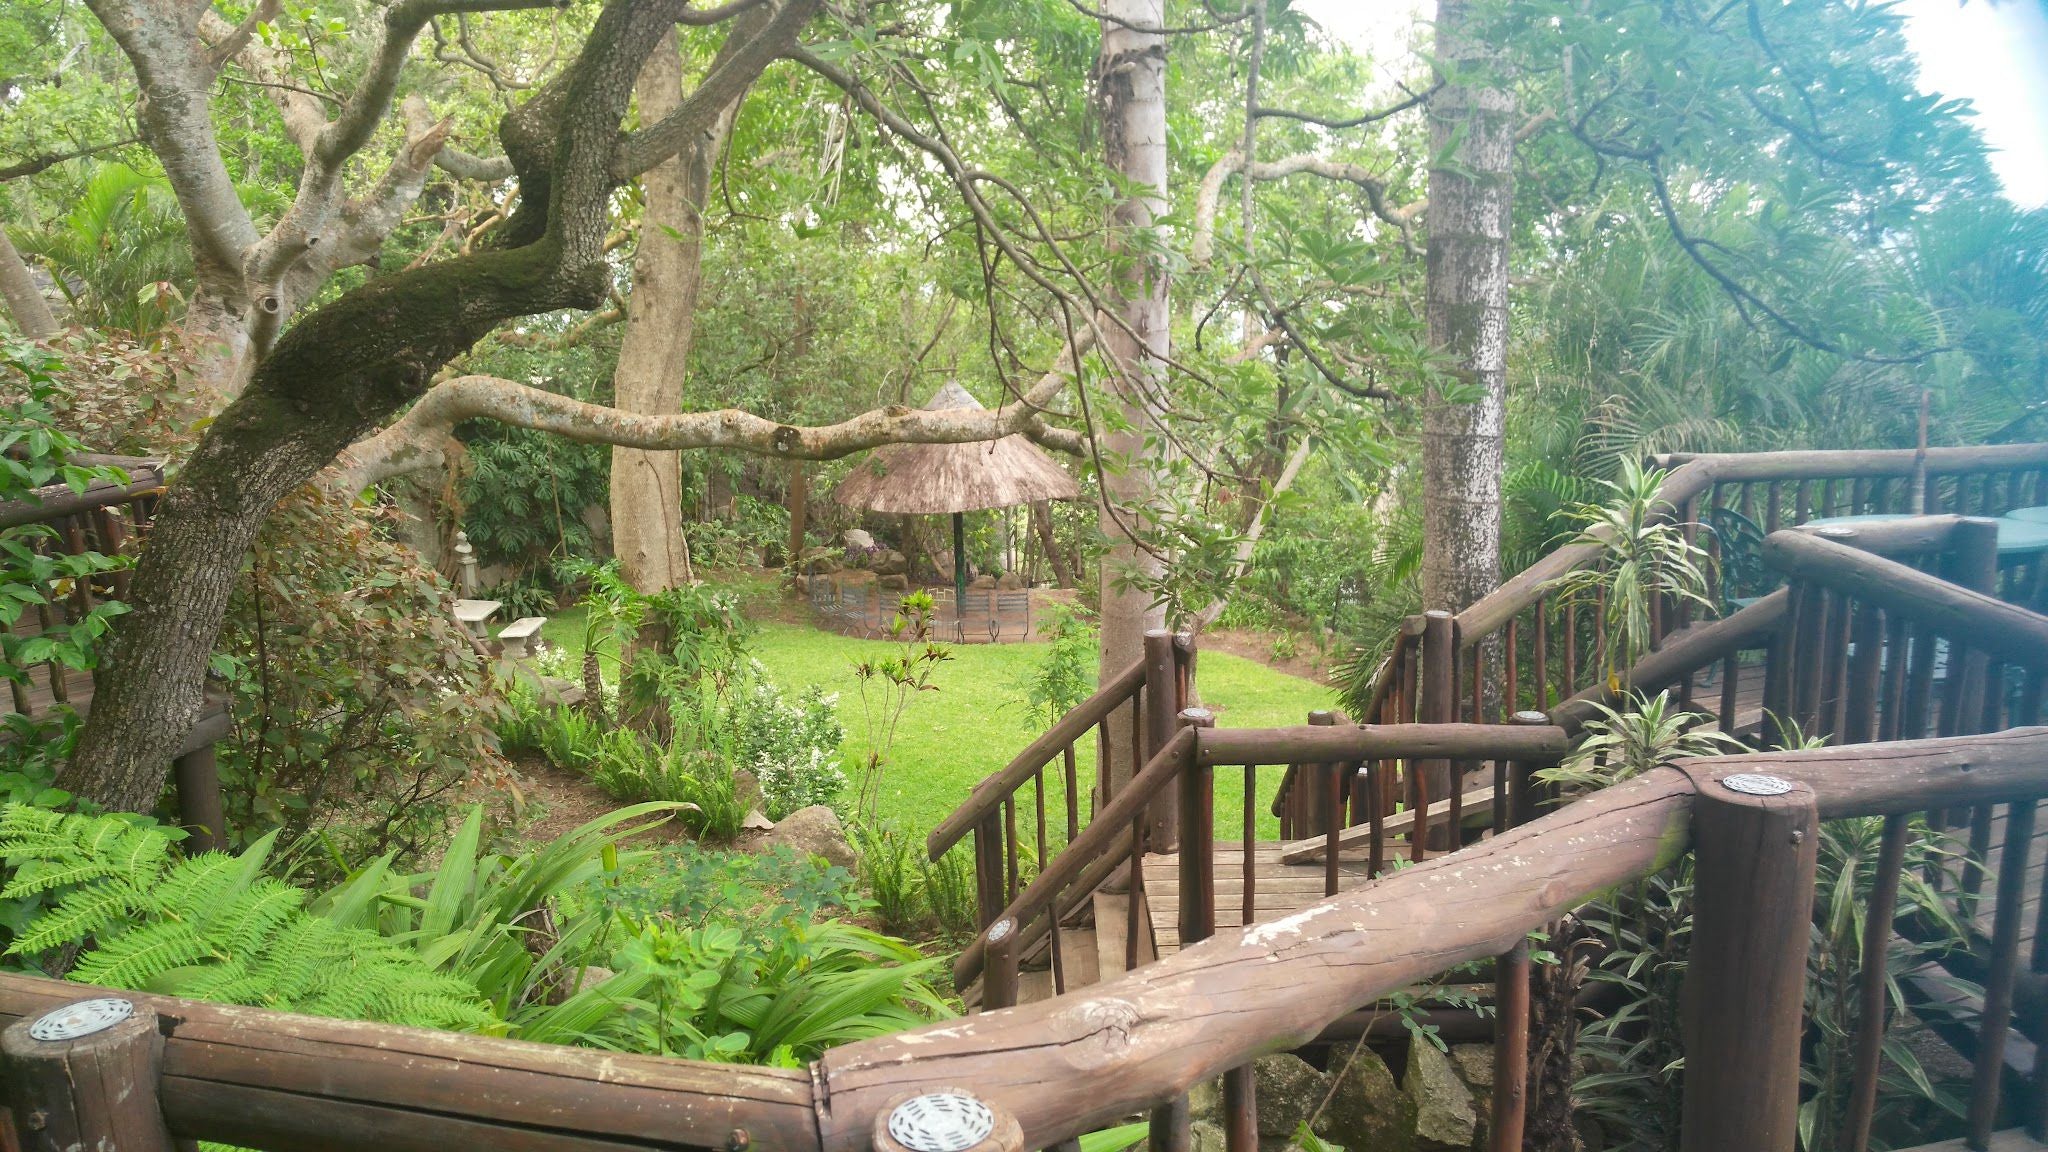 Matopos Lodge Nelspruit Mpumalanga South Africa Plant, Nature, Tree, Wood, Garden